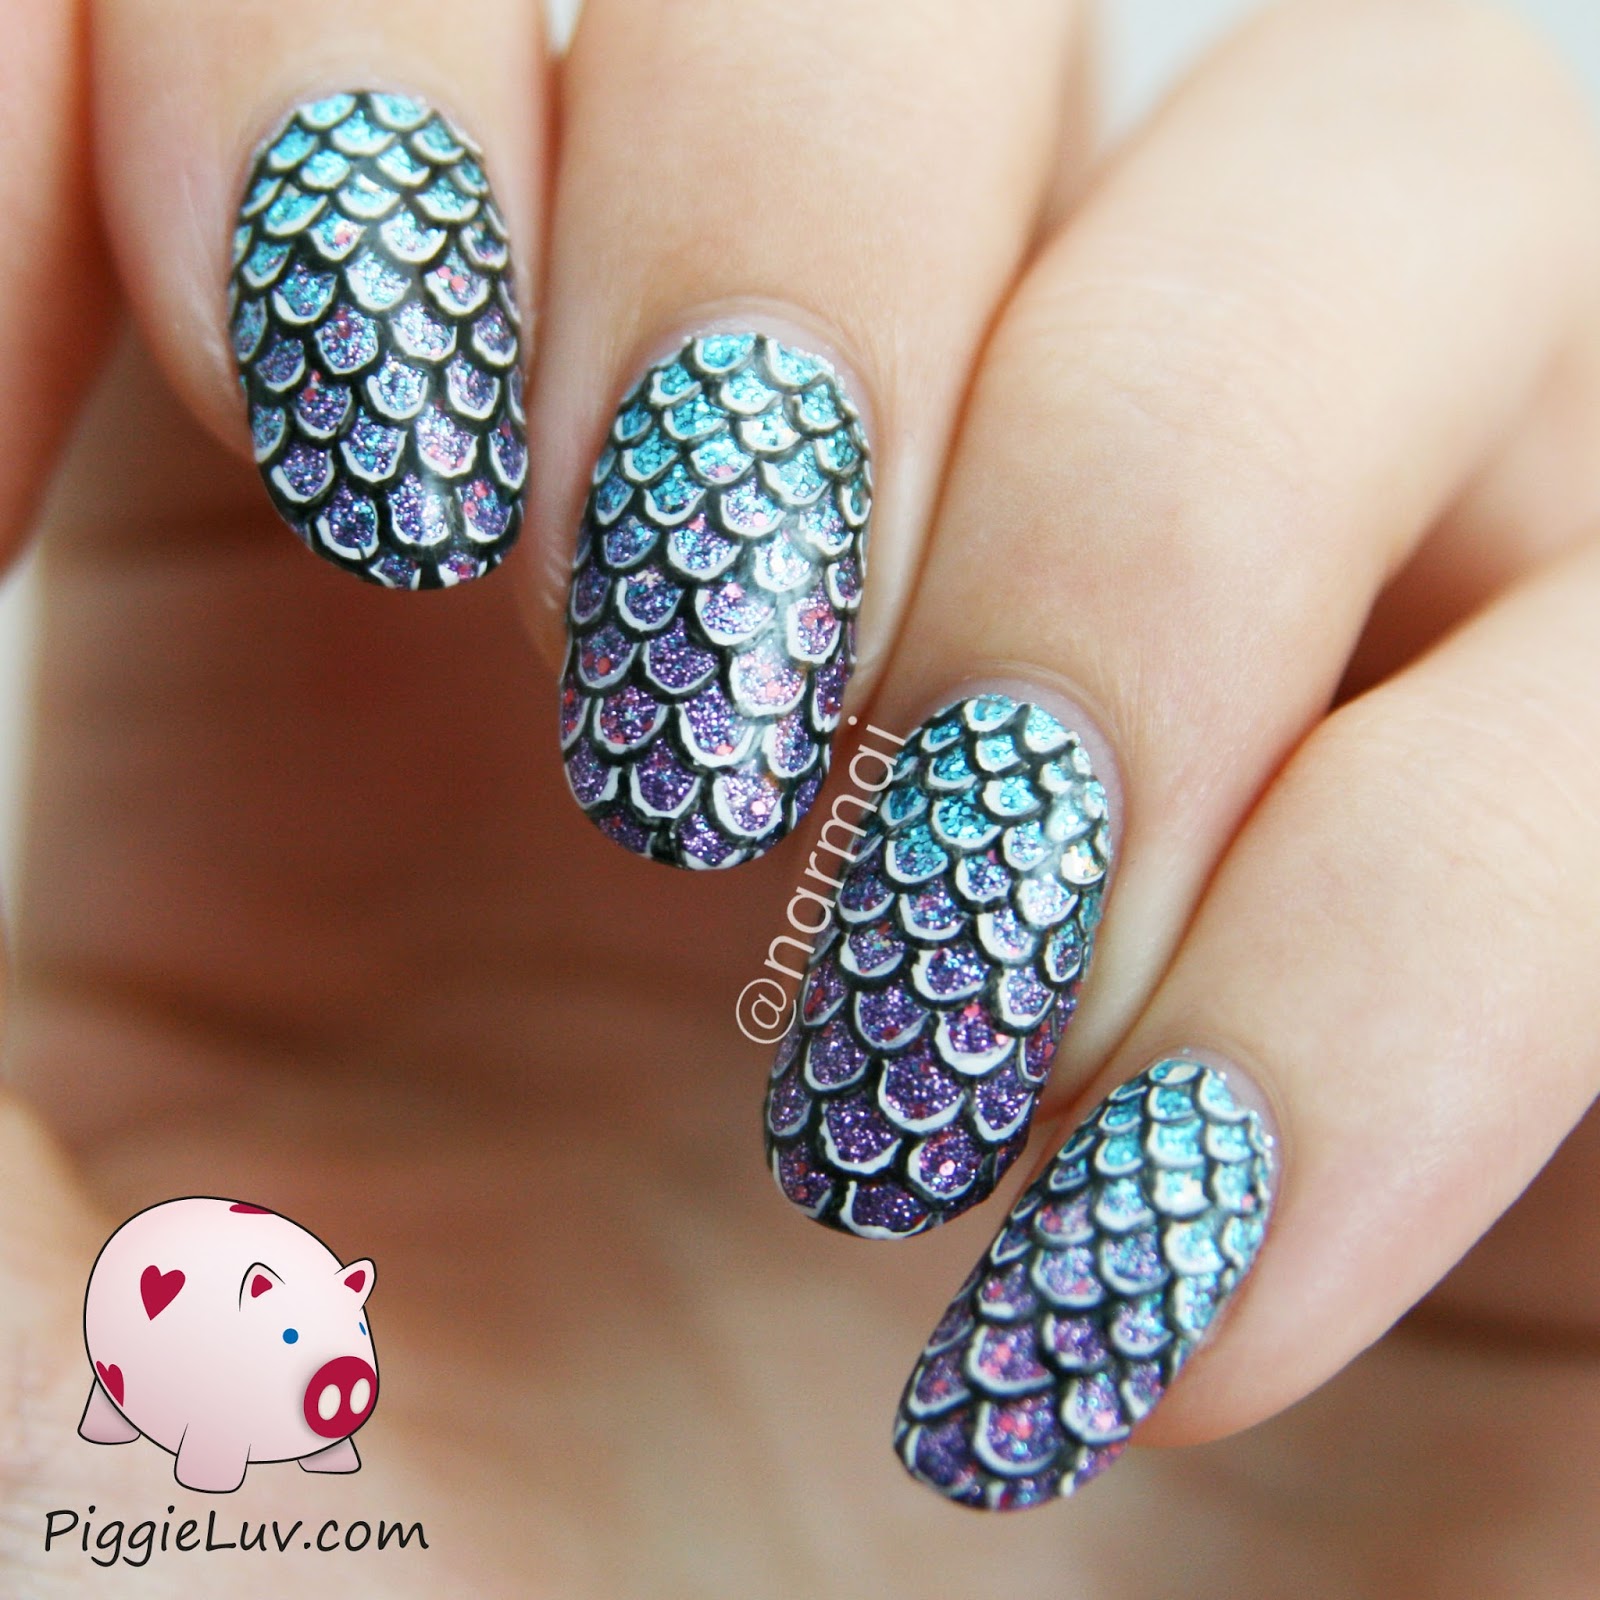 PiggieLuv: Mermaid scales nail art   video tutorial